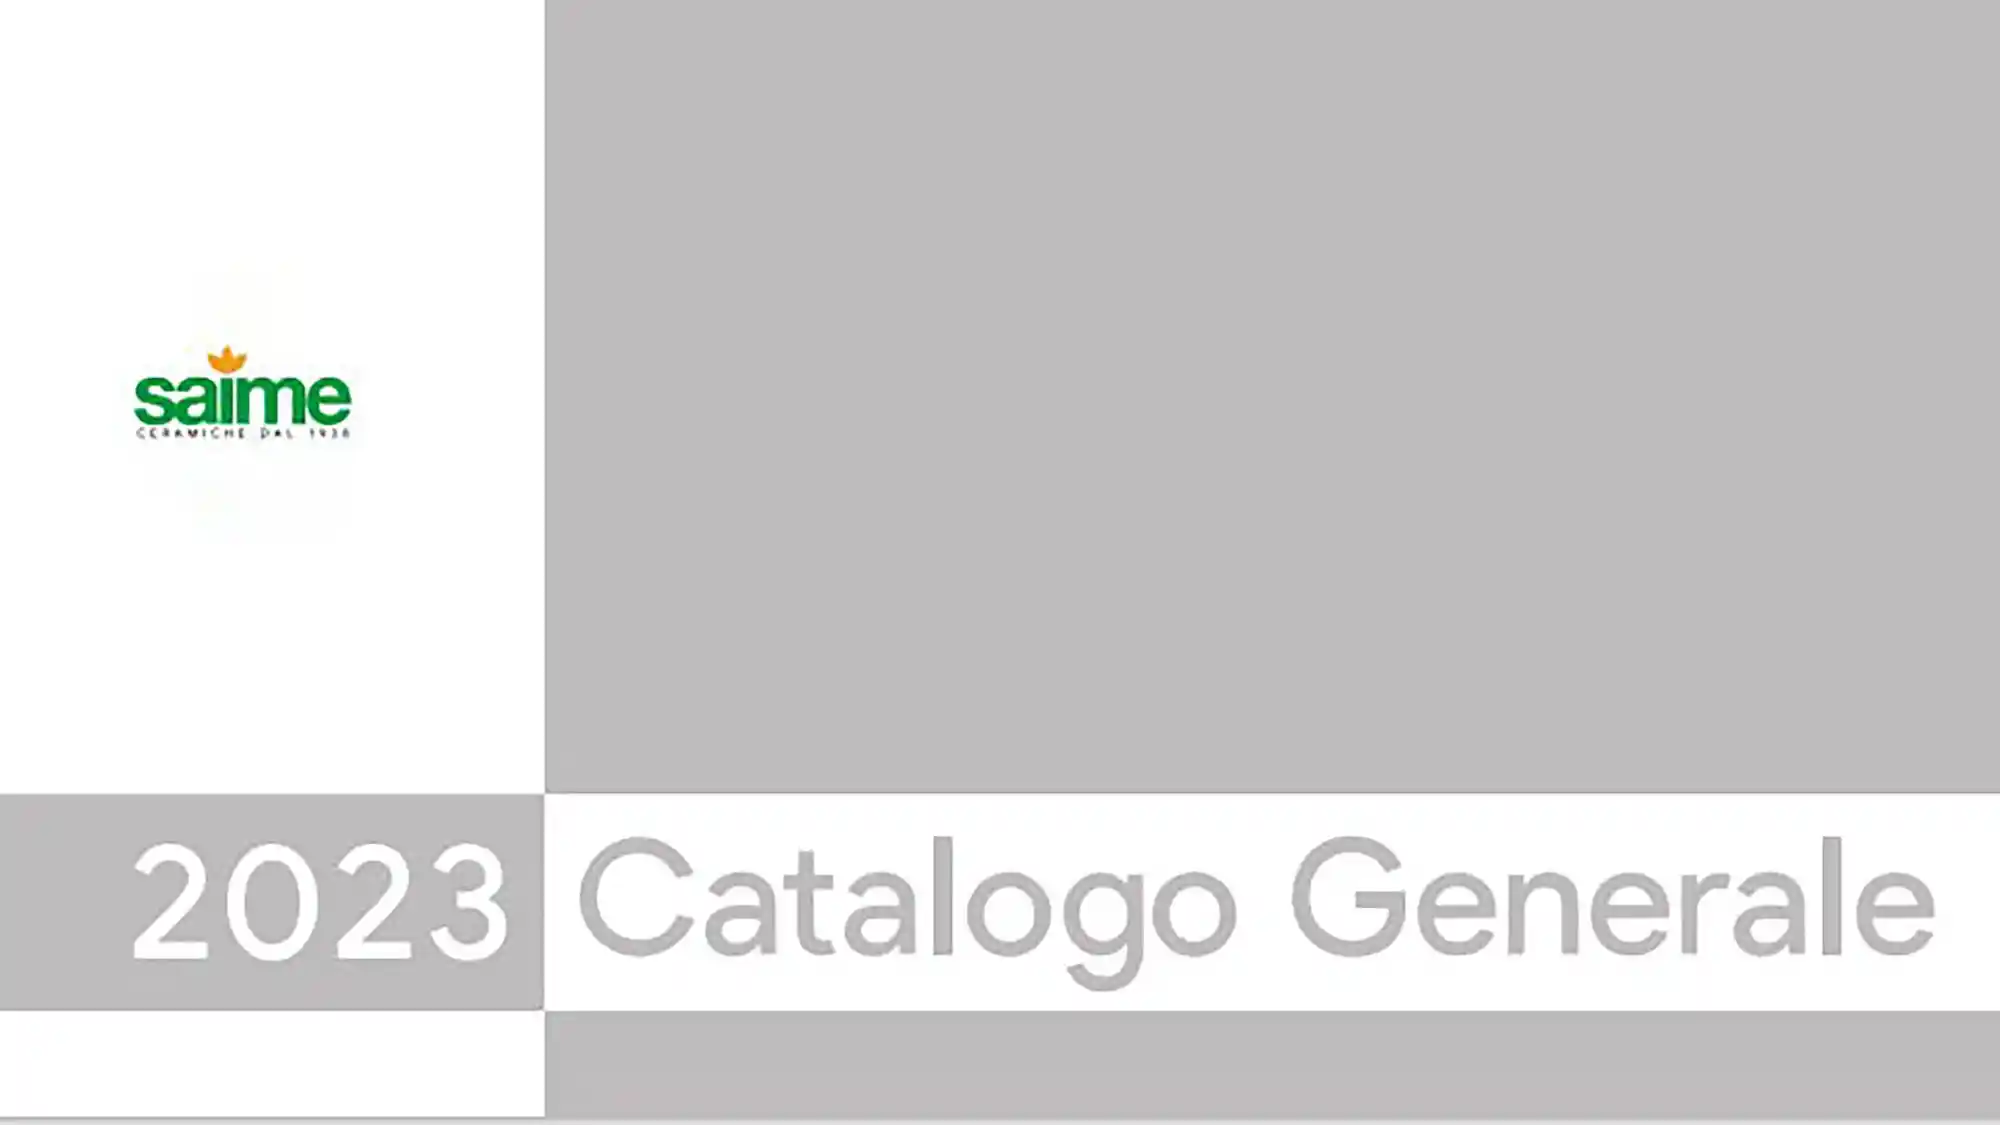 Saime-General Catalog